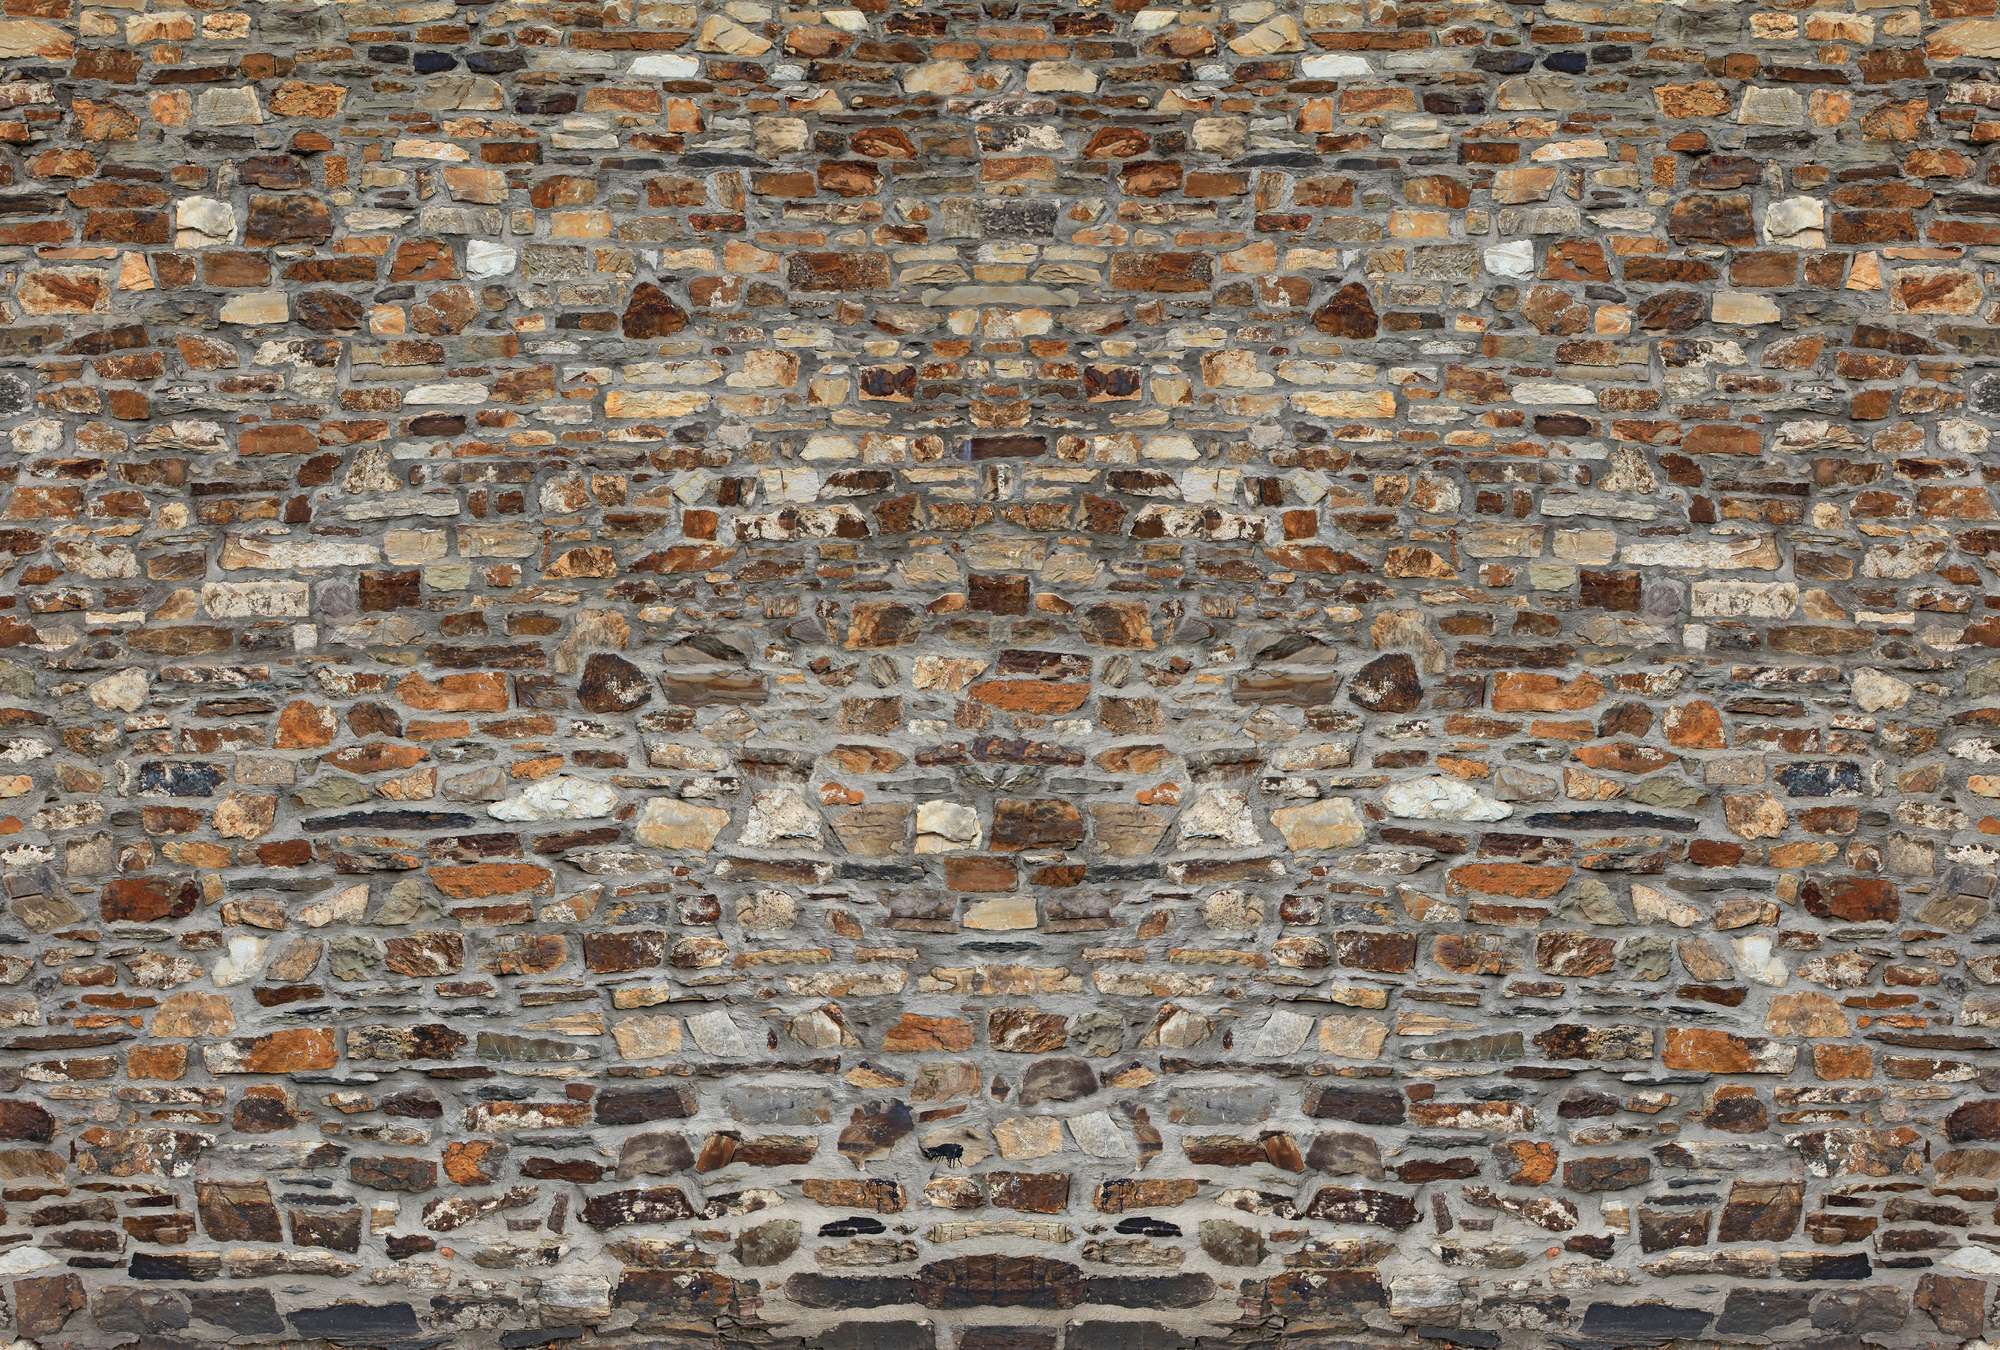             Photo wallpaper 3D wall old bricks & rustic stone look
        